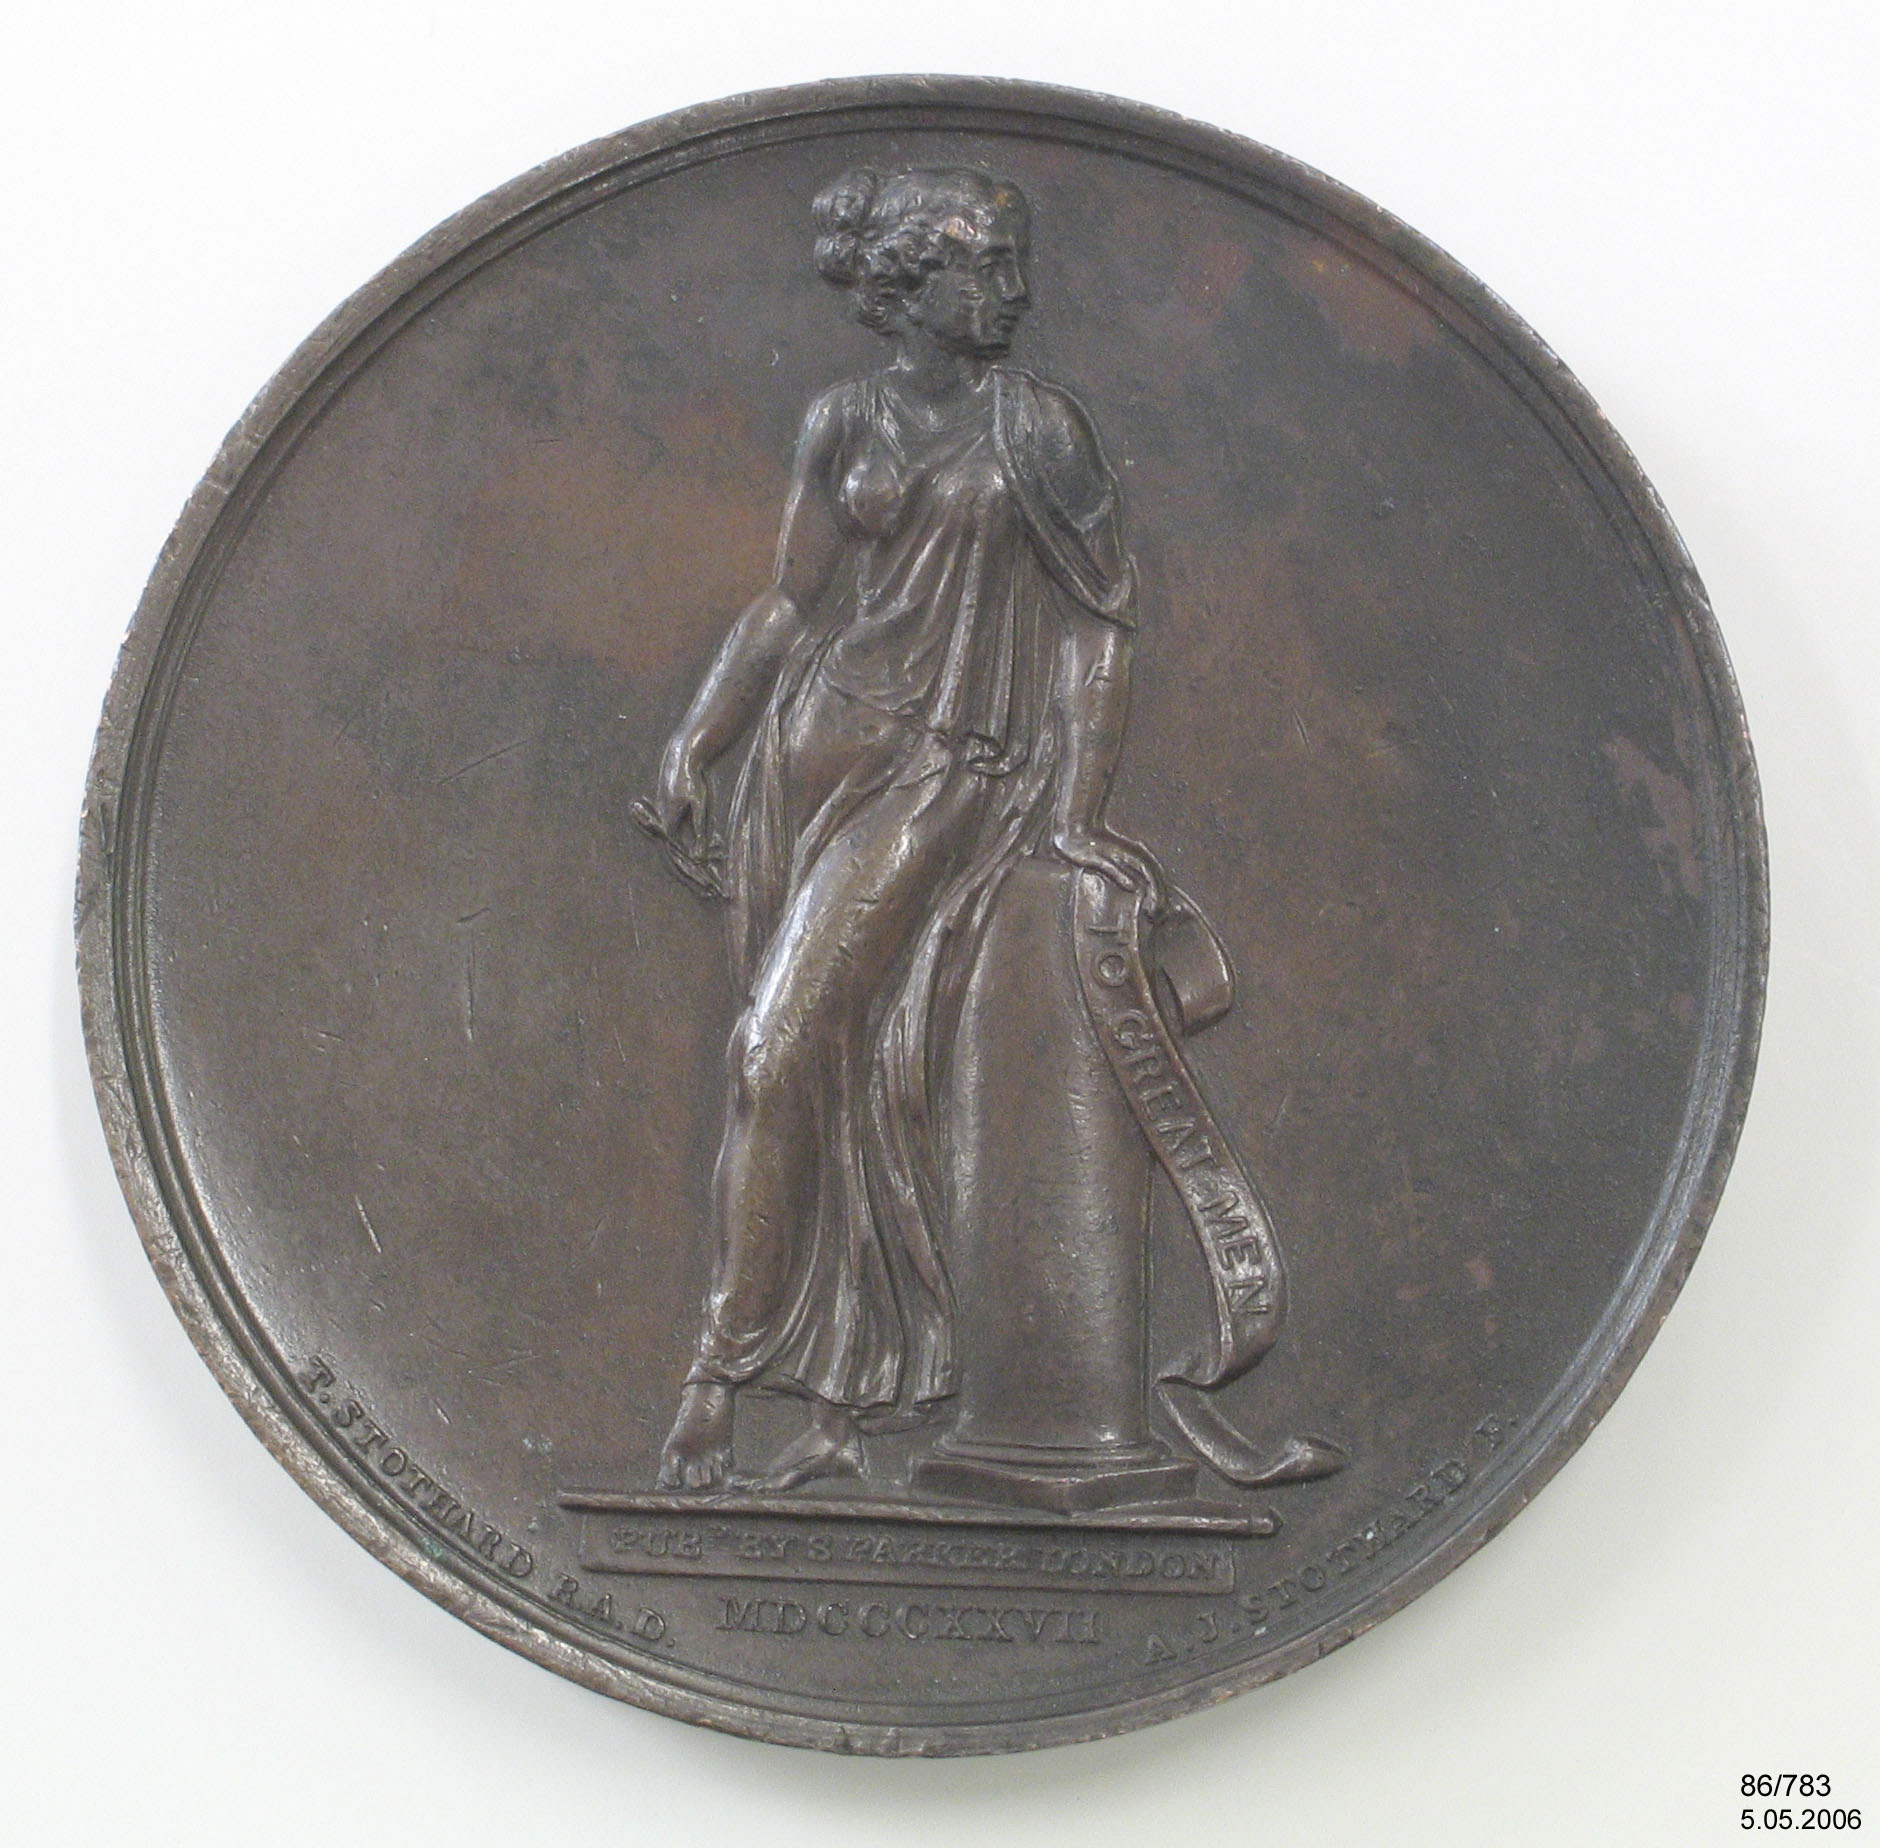 Commemorative medal of James Watt